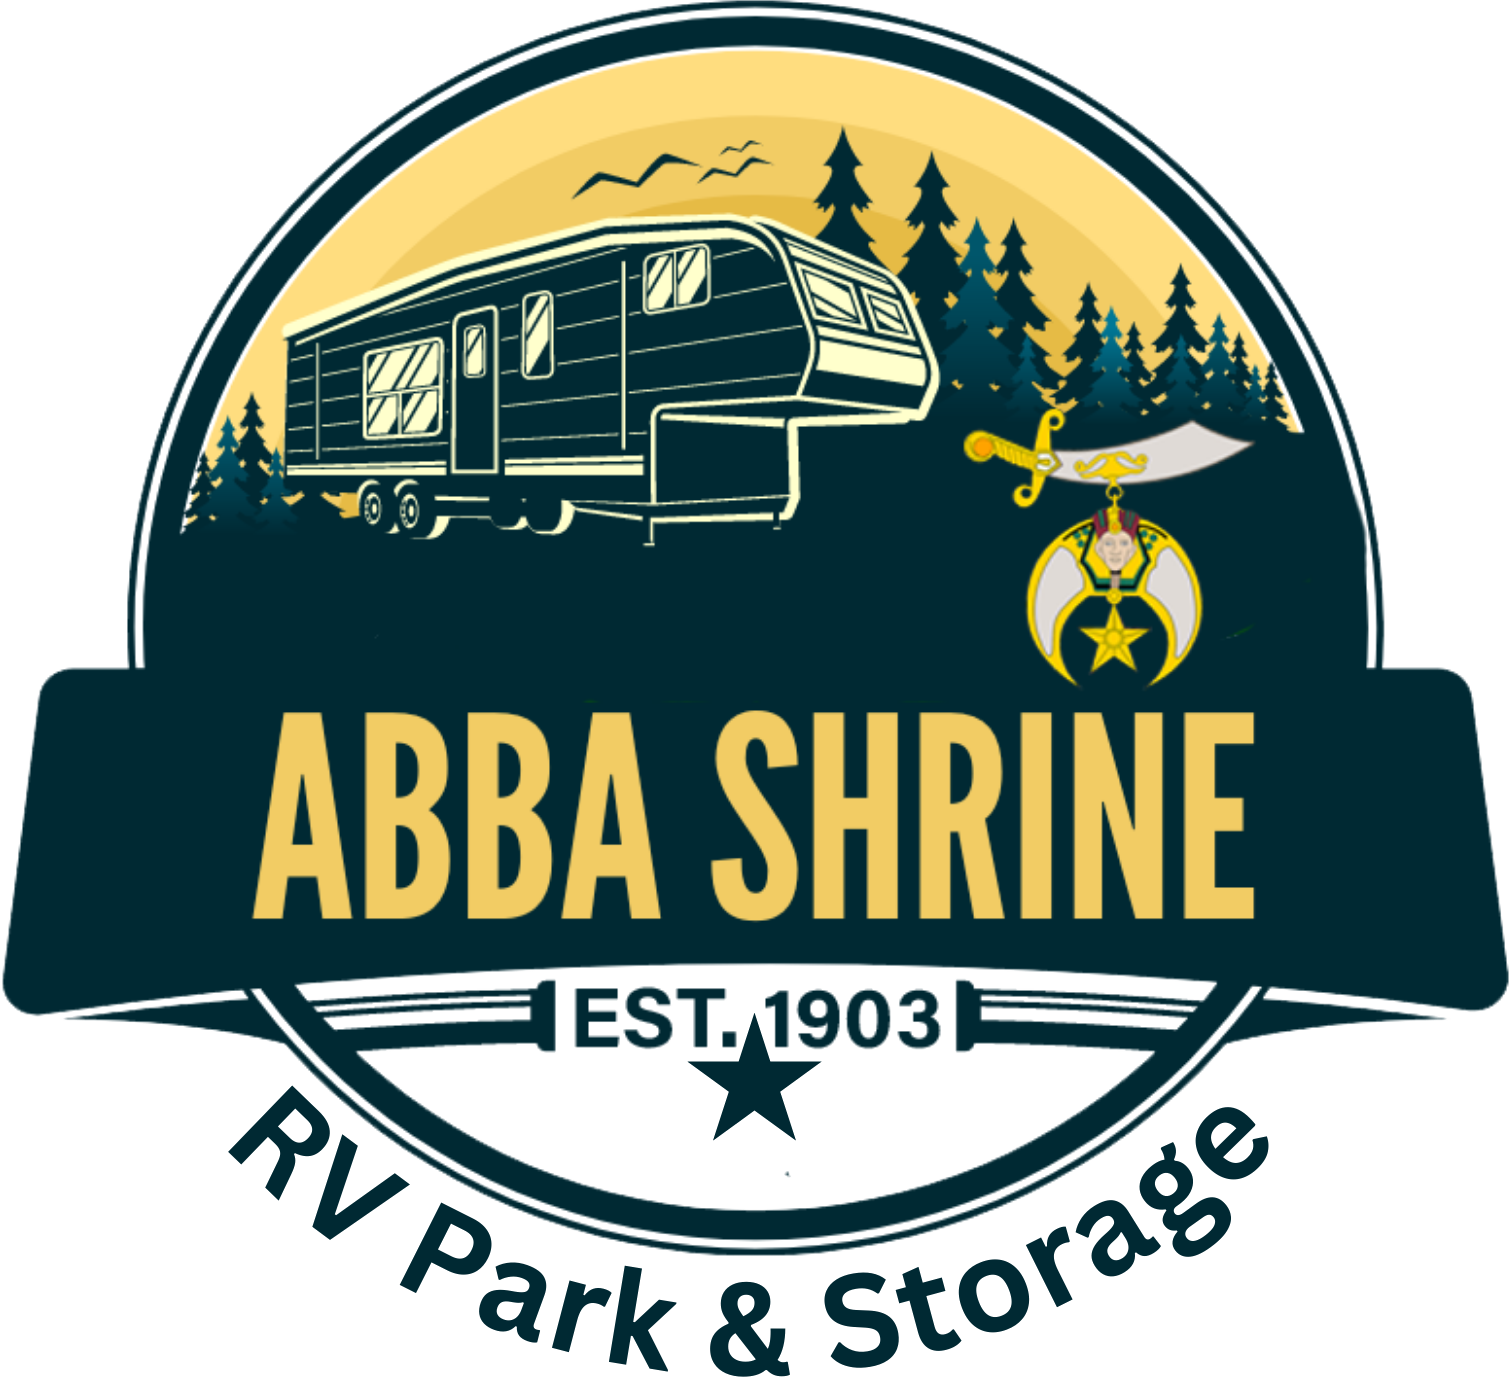 ABBA Shrine RV Park